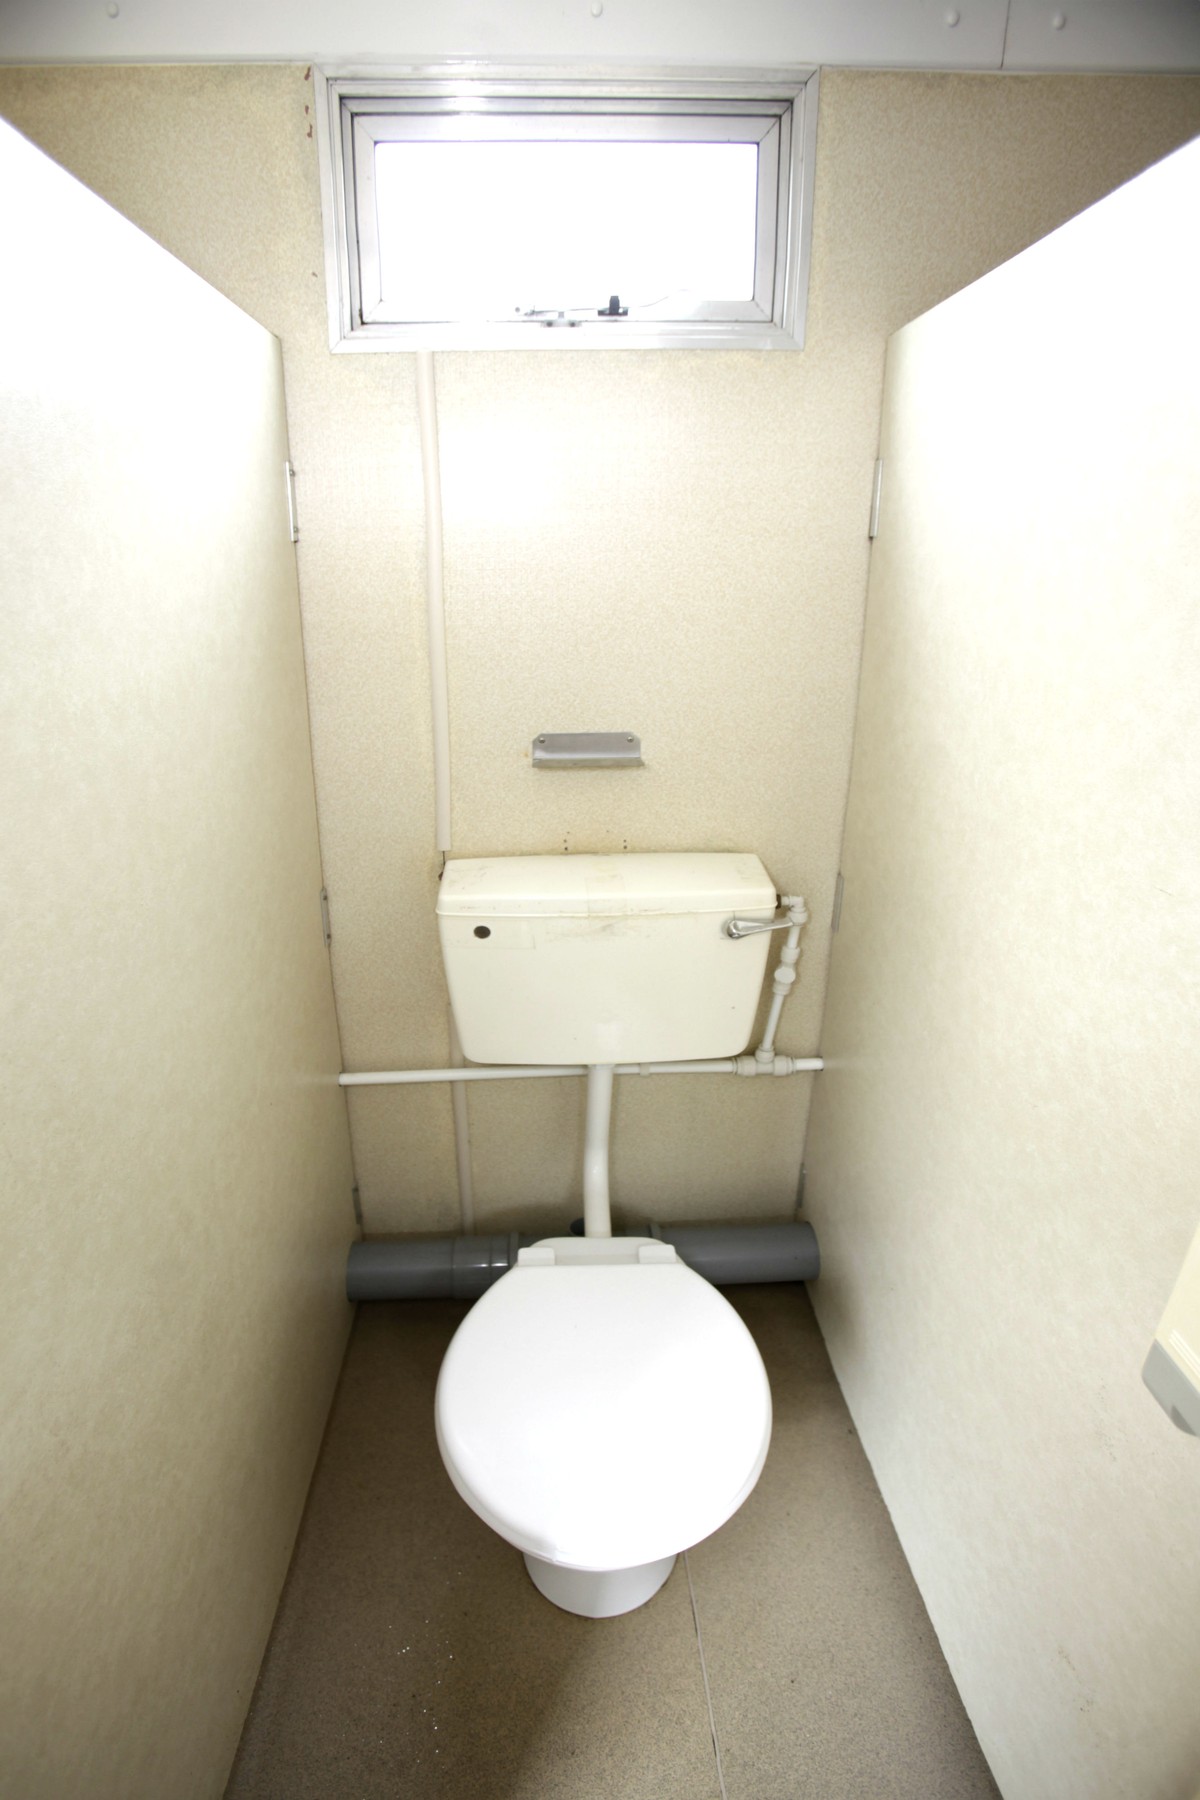 Secondhand Toilet Units 4 3 Toilet Trailers 4 3 Toilet Trailer Or